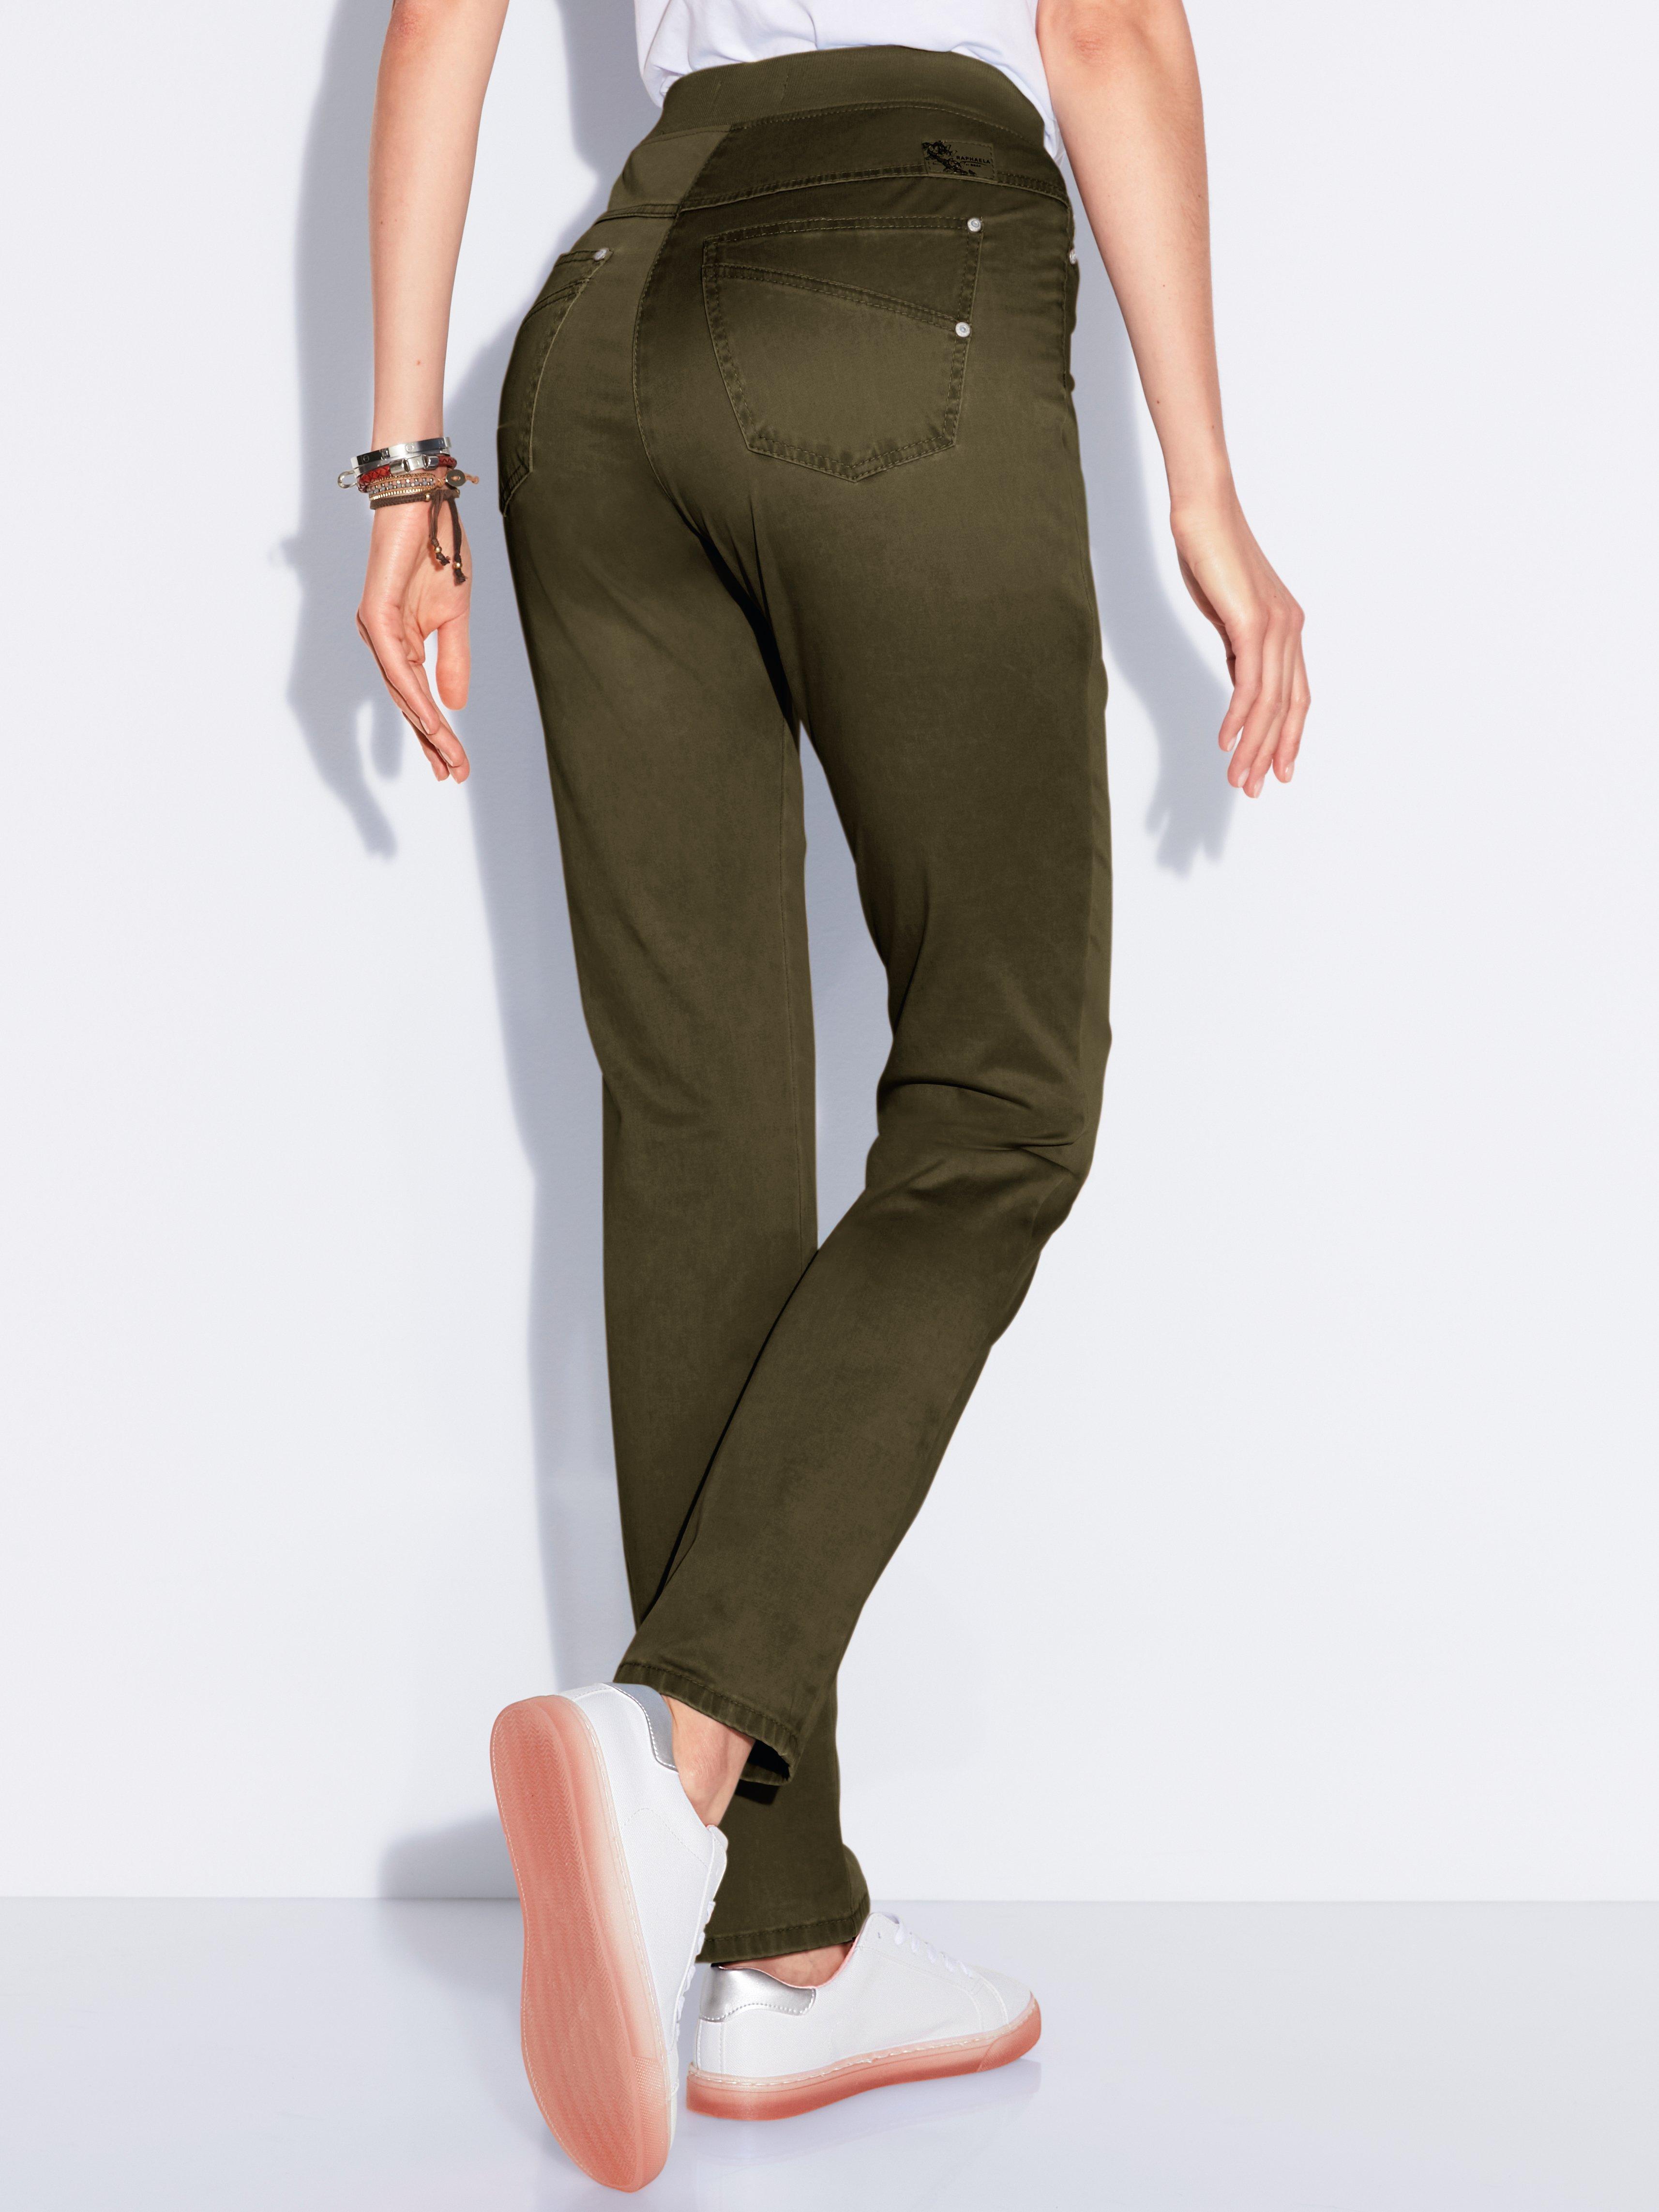 Raphaela by Brax - Le pantalon Comfort Plus modèle Carina